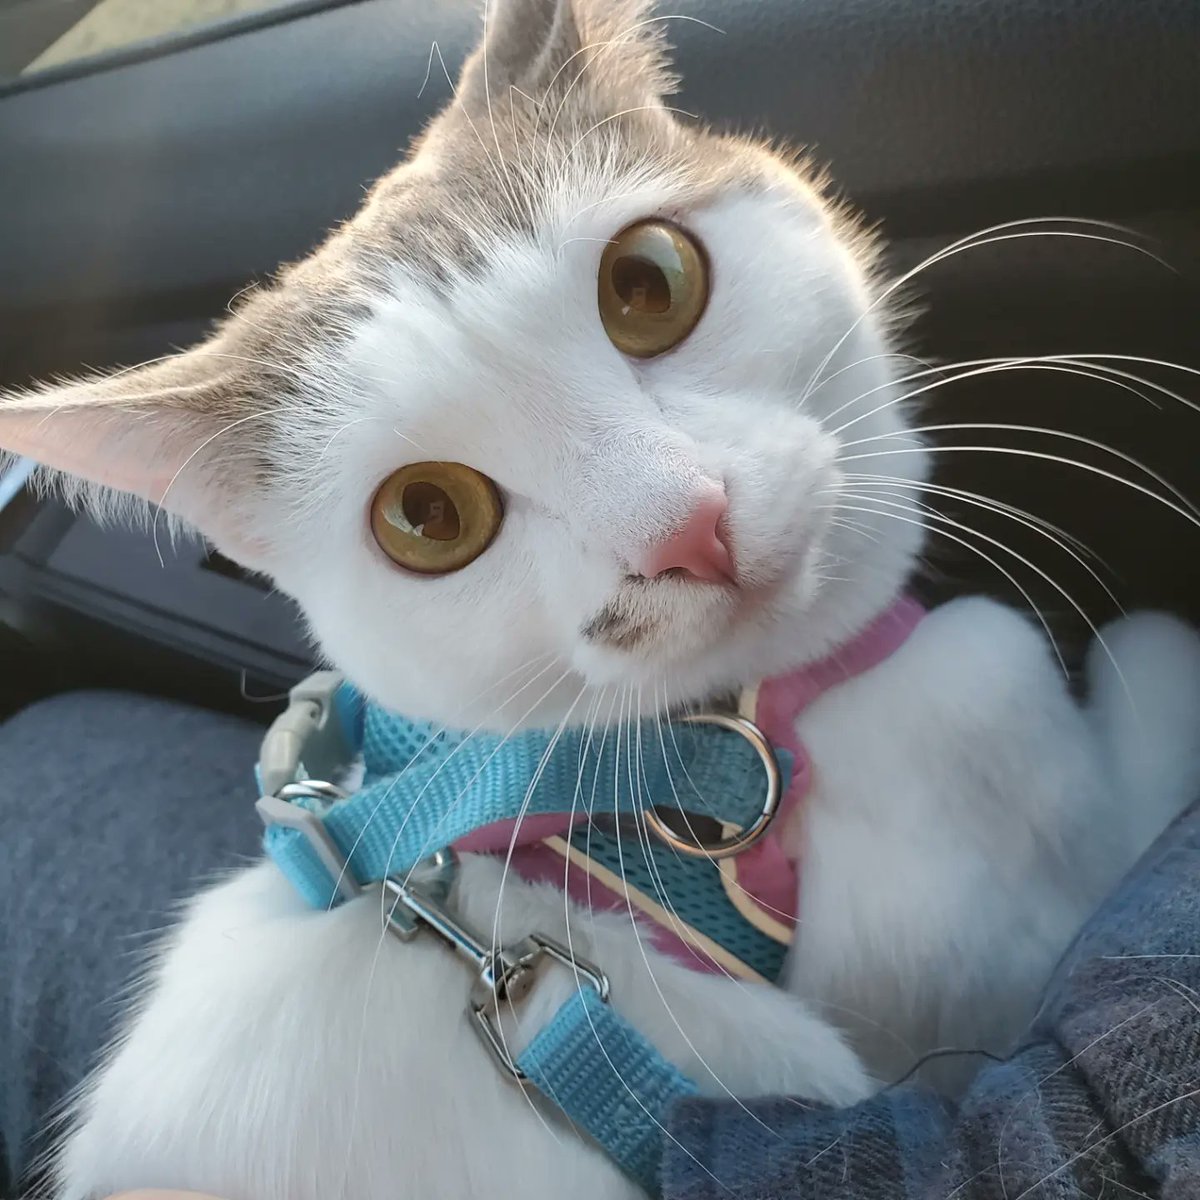 Cleo on a car ride lol #cats #mycat #catstagram #catsareawesome #catsofinstagram #kittenlove #kittens #kittenlovers #cute #funnycat #carride #pets #catphotography #friendship #friends #friendsforever